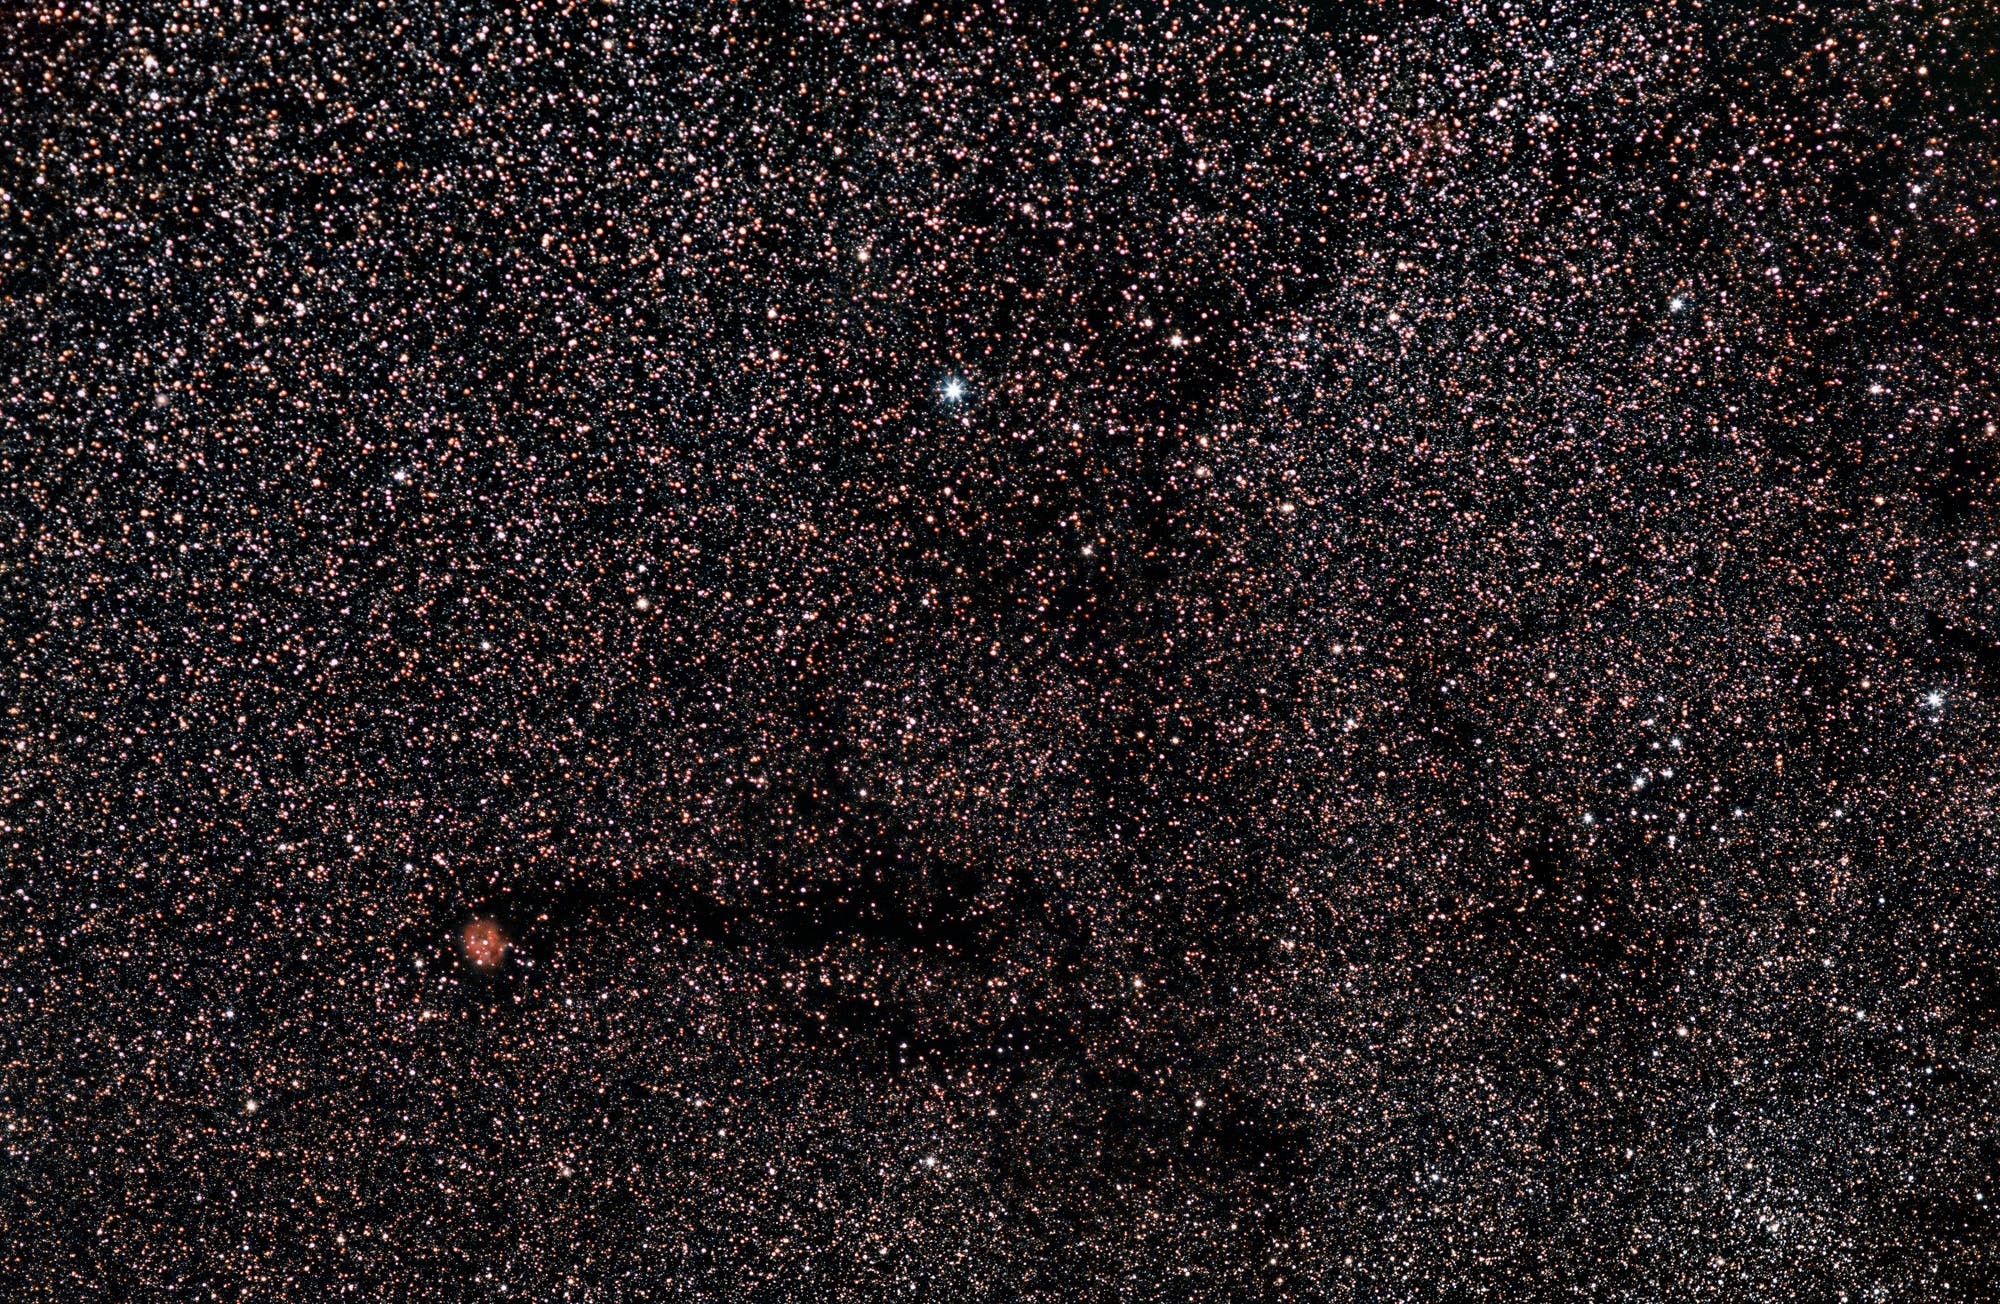 IC 5146 "THE COCOON NEBULA" & M 39 IN CYGNUS